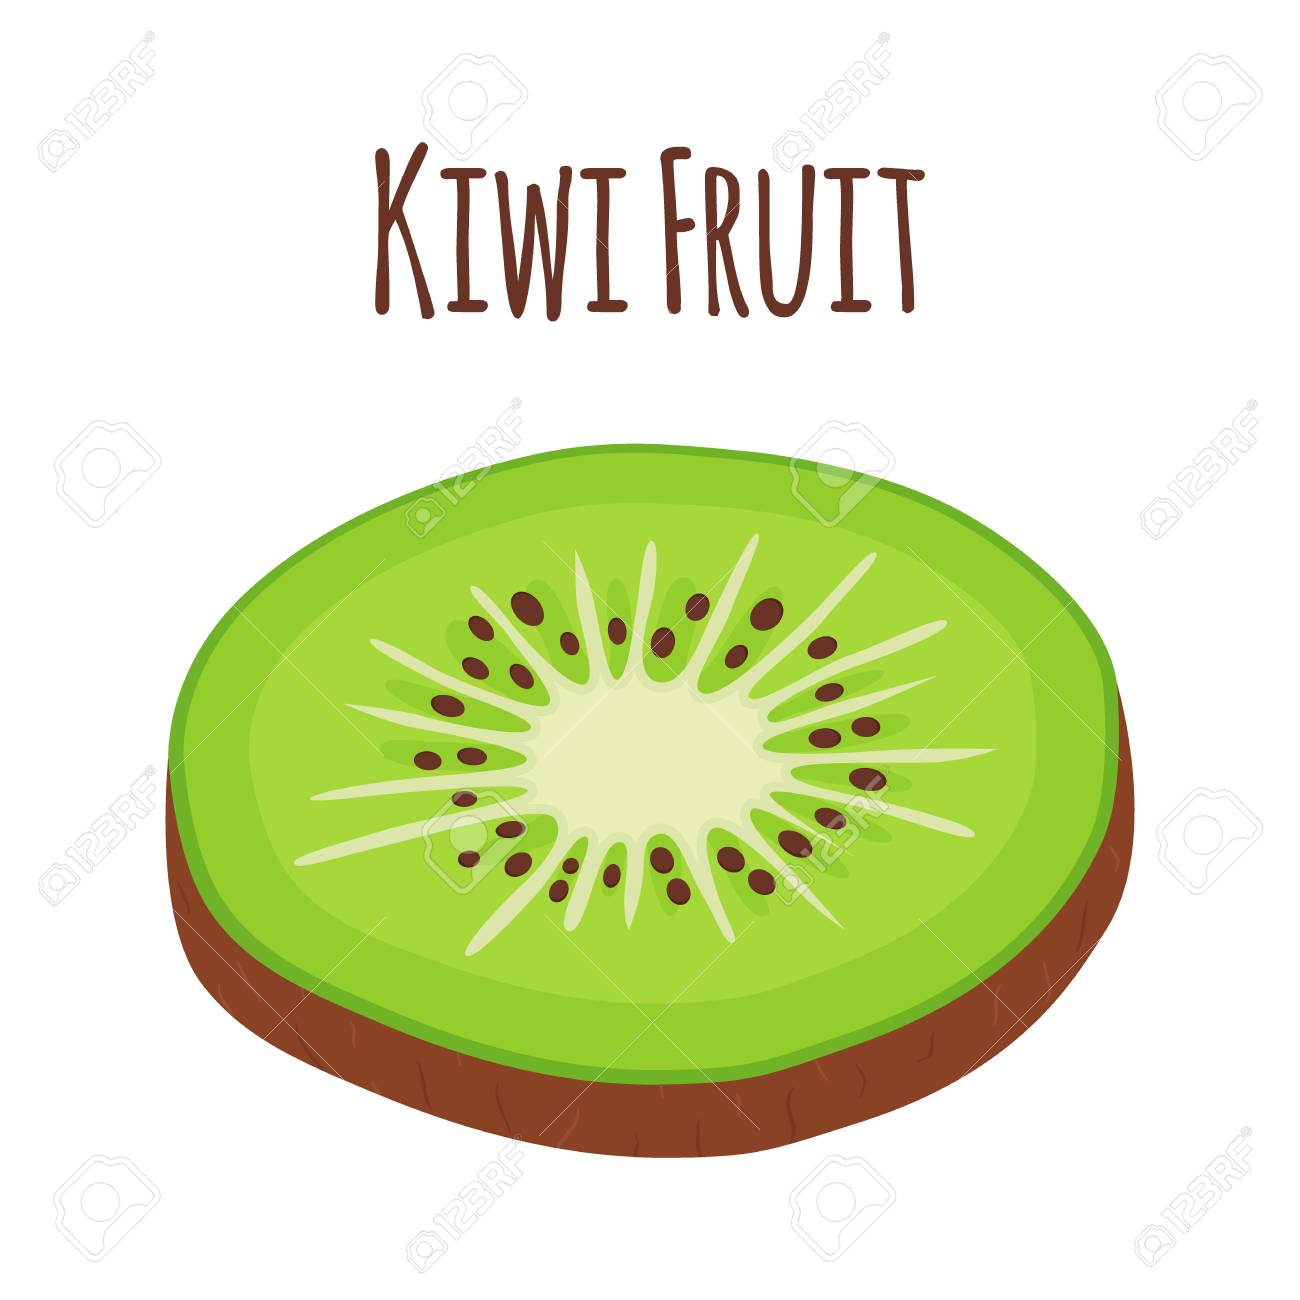 Dessin kiwi fruit